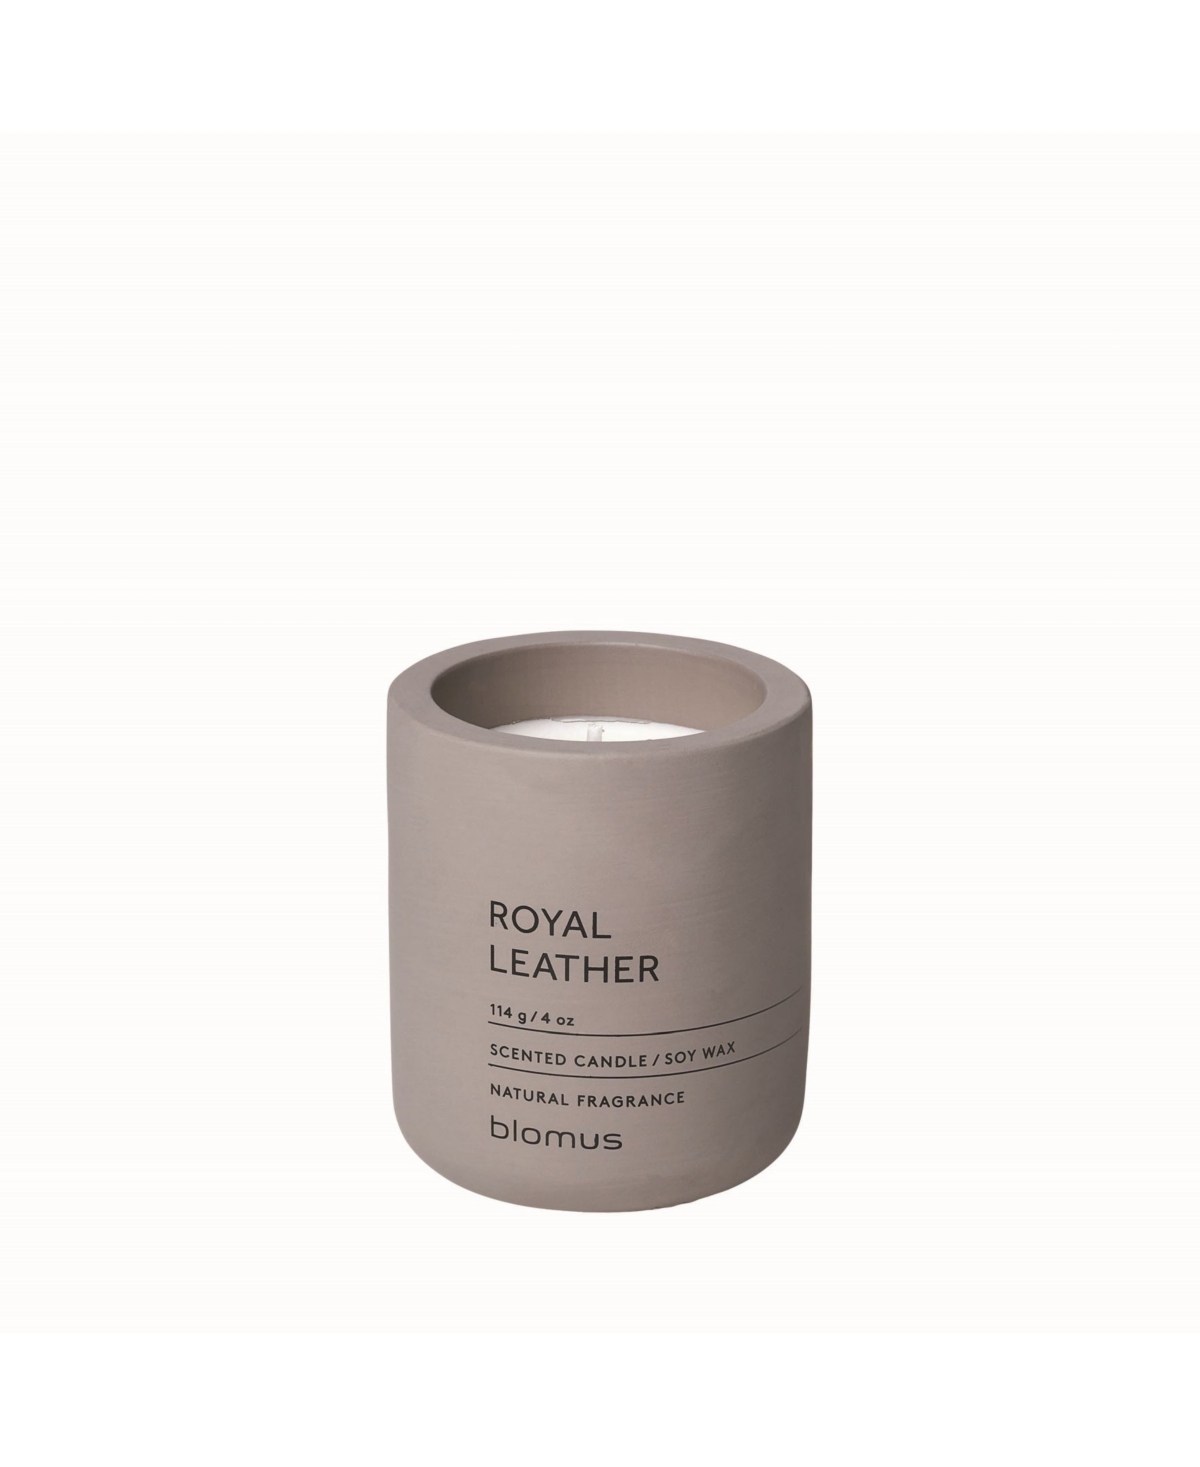 Fraga Royal Leather Fragrance 2.5 Candle, 4 oz